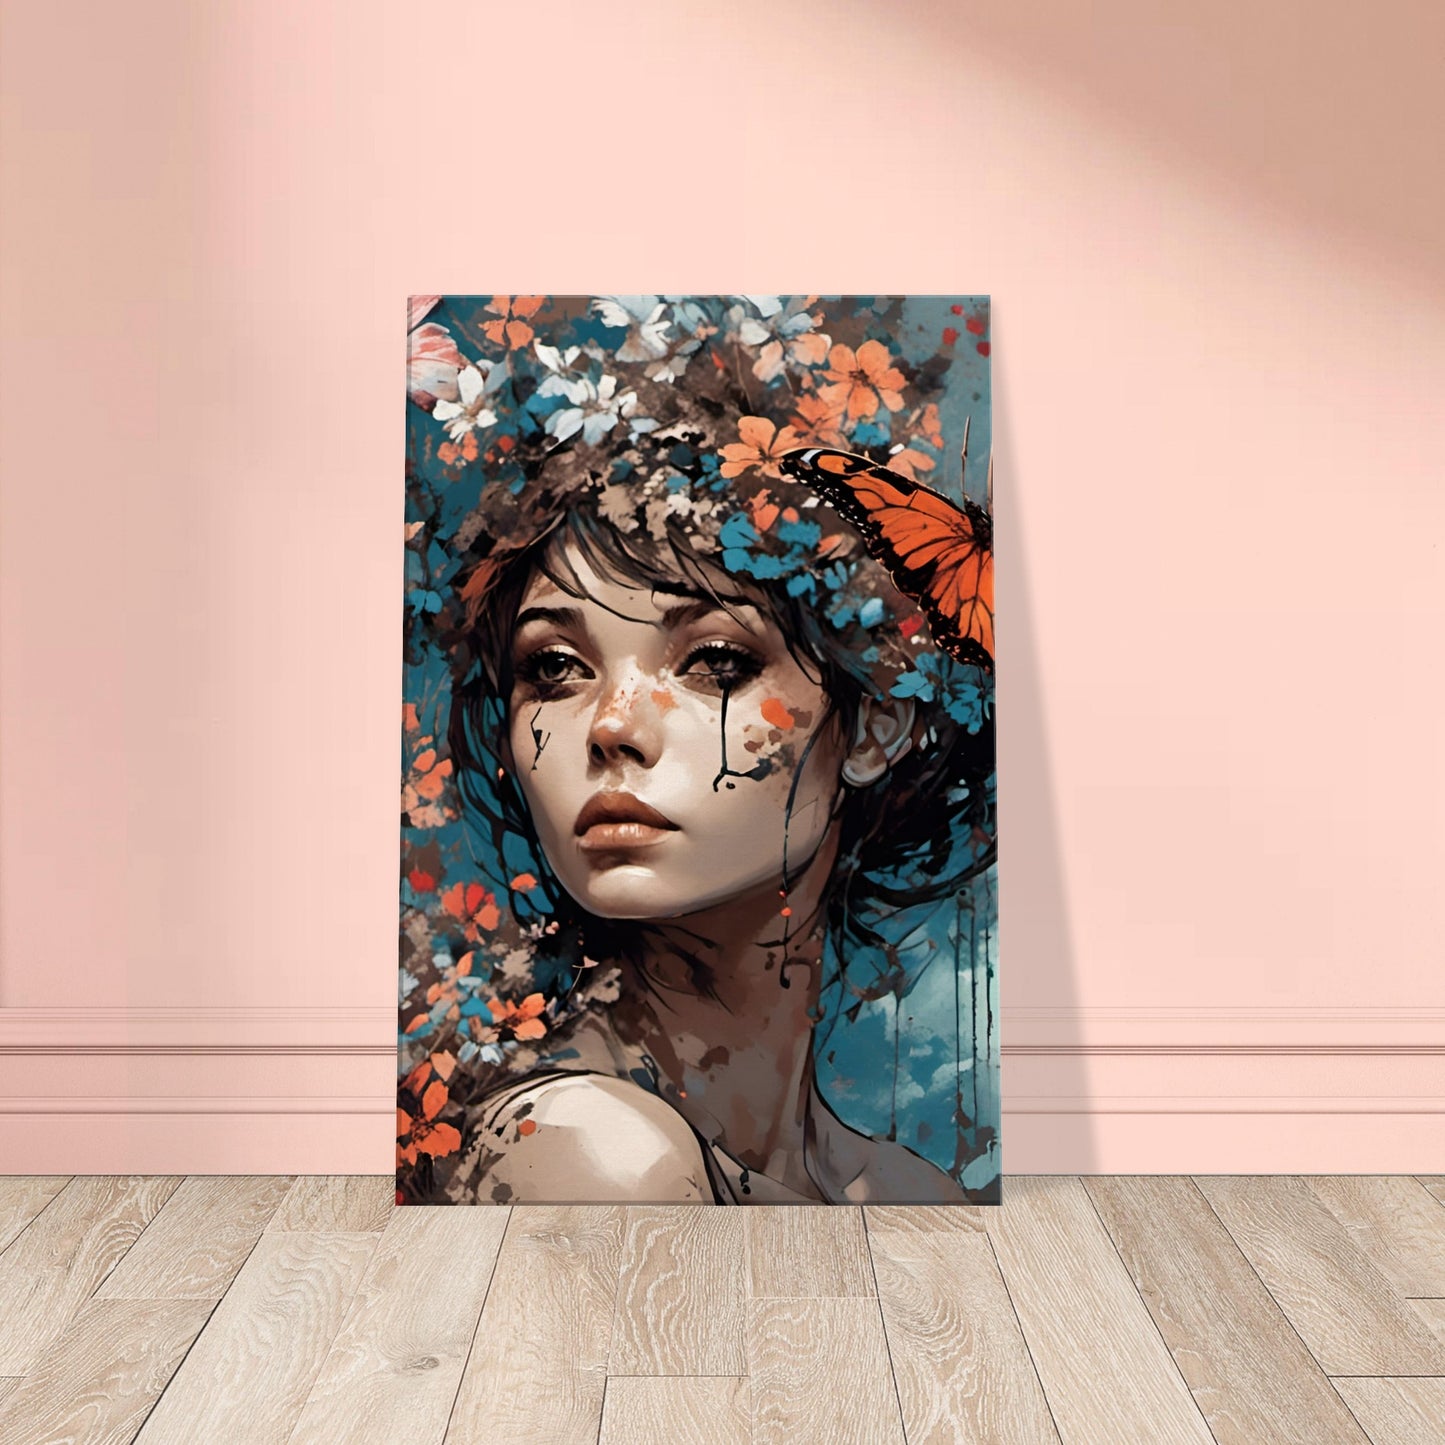 "Butterfly Waltz: The Sweet Fantasy of a Woman" 2D digital Art Canvas Art